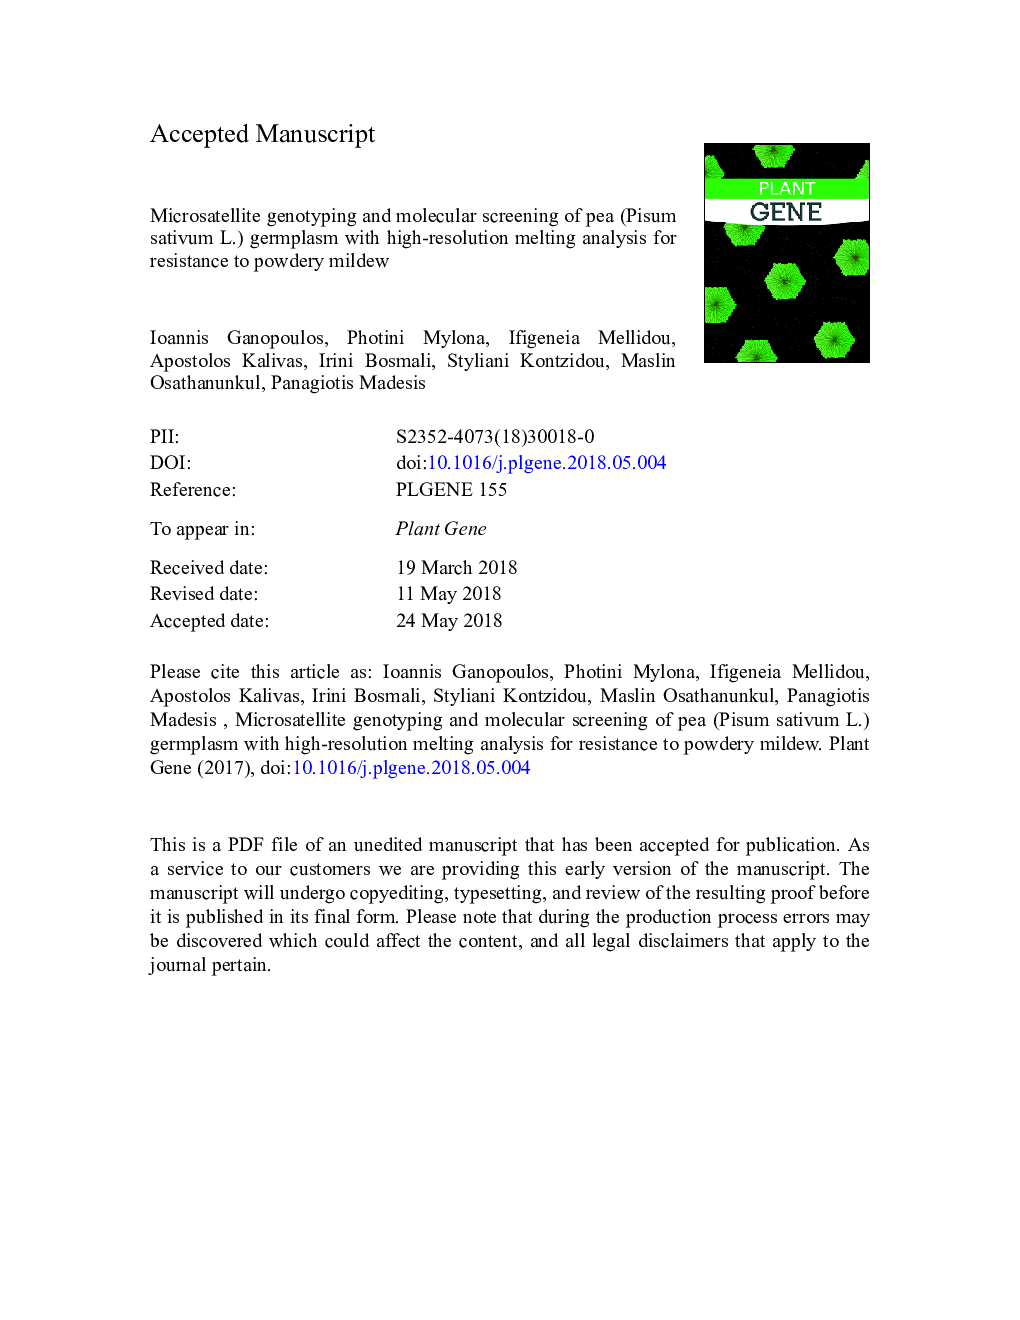 Microsatellite genotyping and molecular screening of pea (Pisum sativum L.) germplasm with high-resolution melting analysis for resistance to powdery mildew